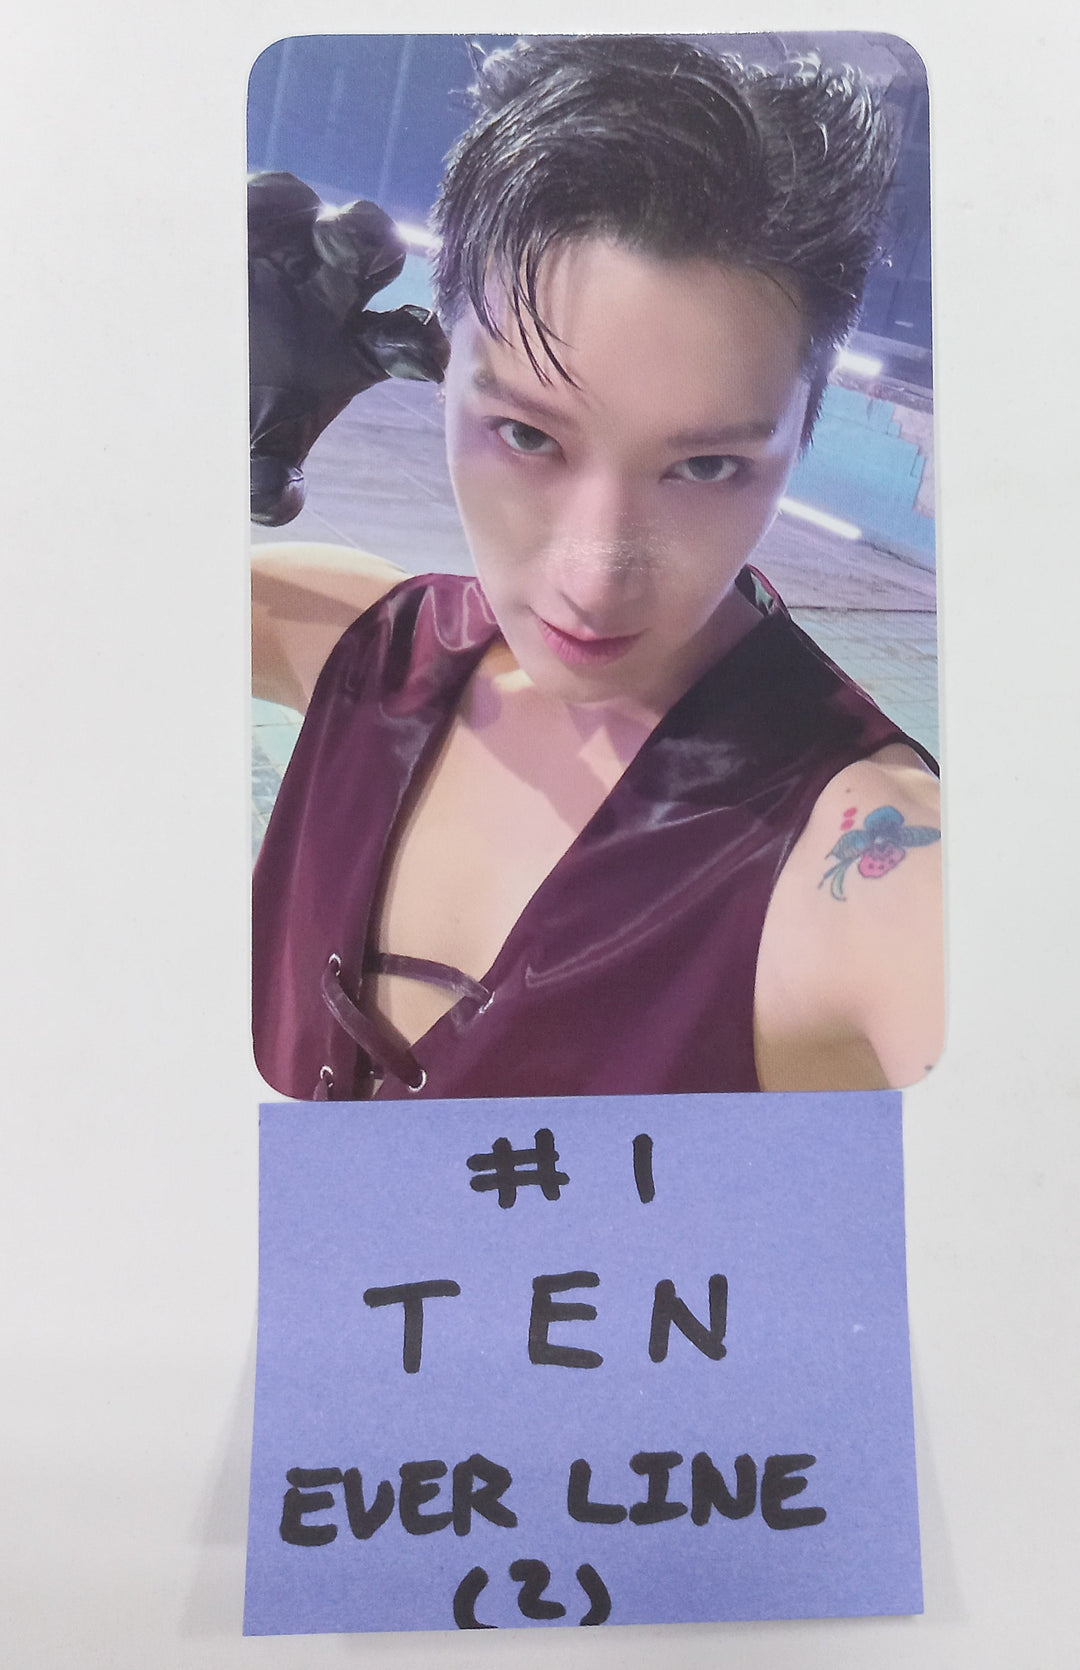 TEN 1st Mini "TEN" - Everline イベントフォトカード [24.02.29]